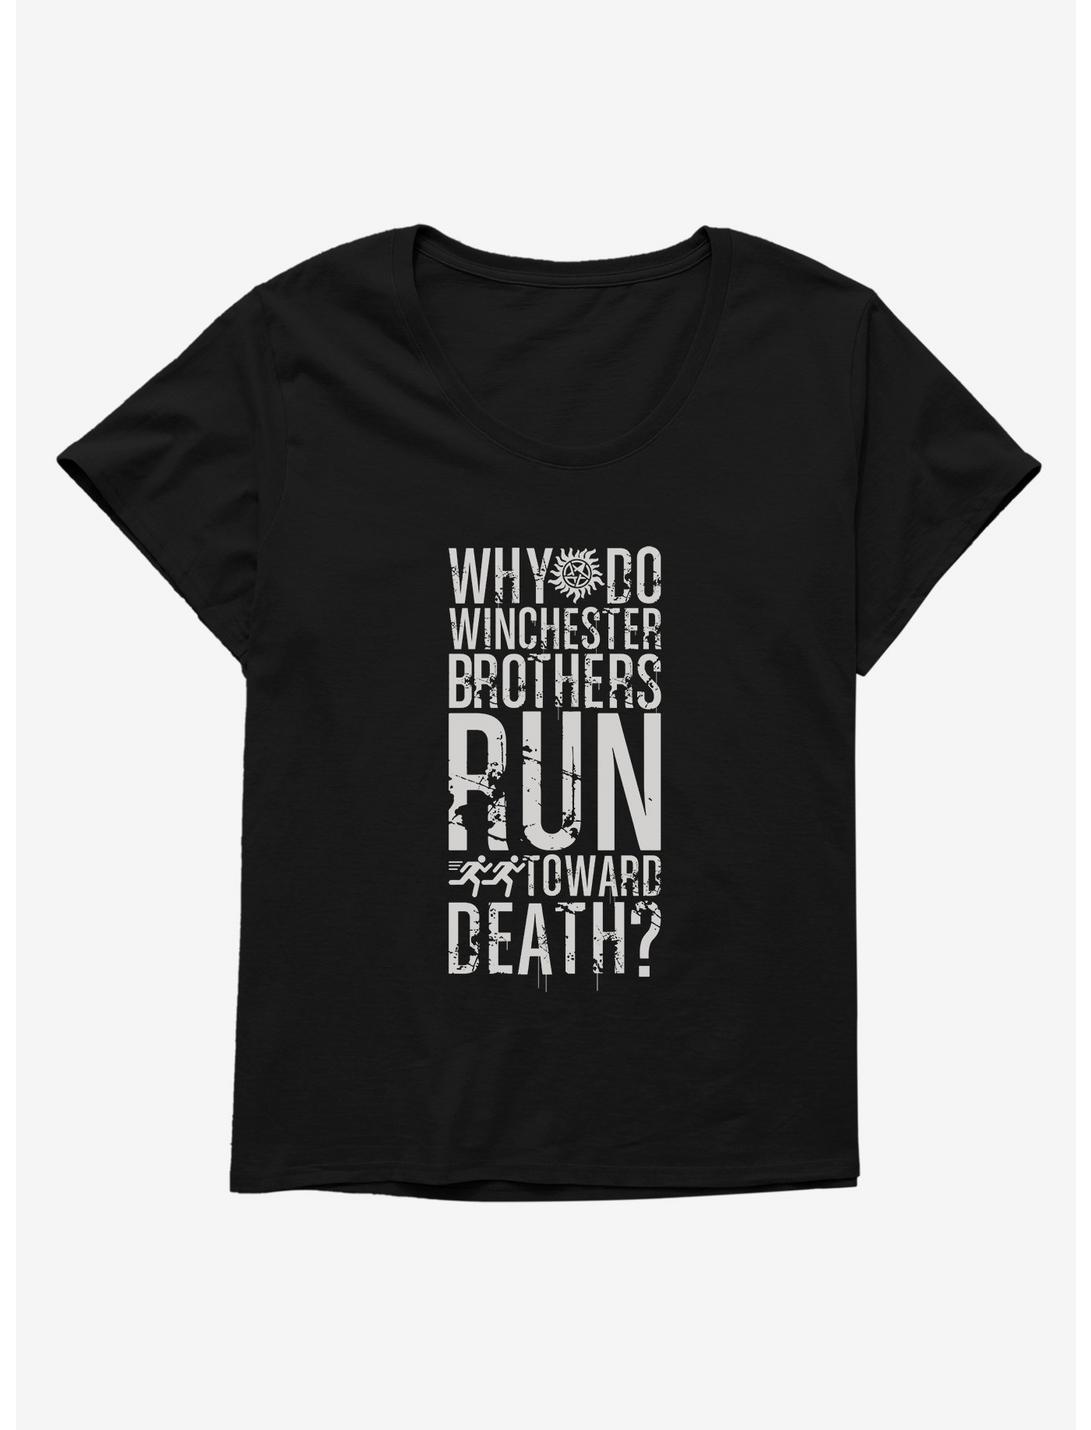 Supernatural Winchesters Run Toward Death Girls T-Shirt Plus Size, , hi-res